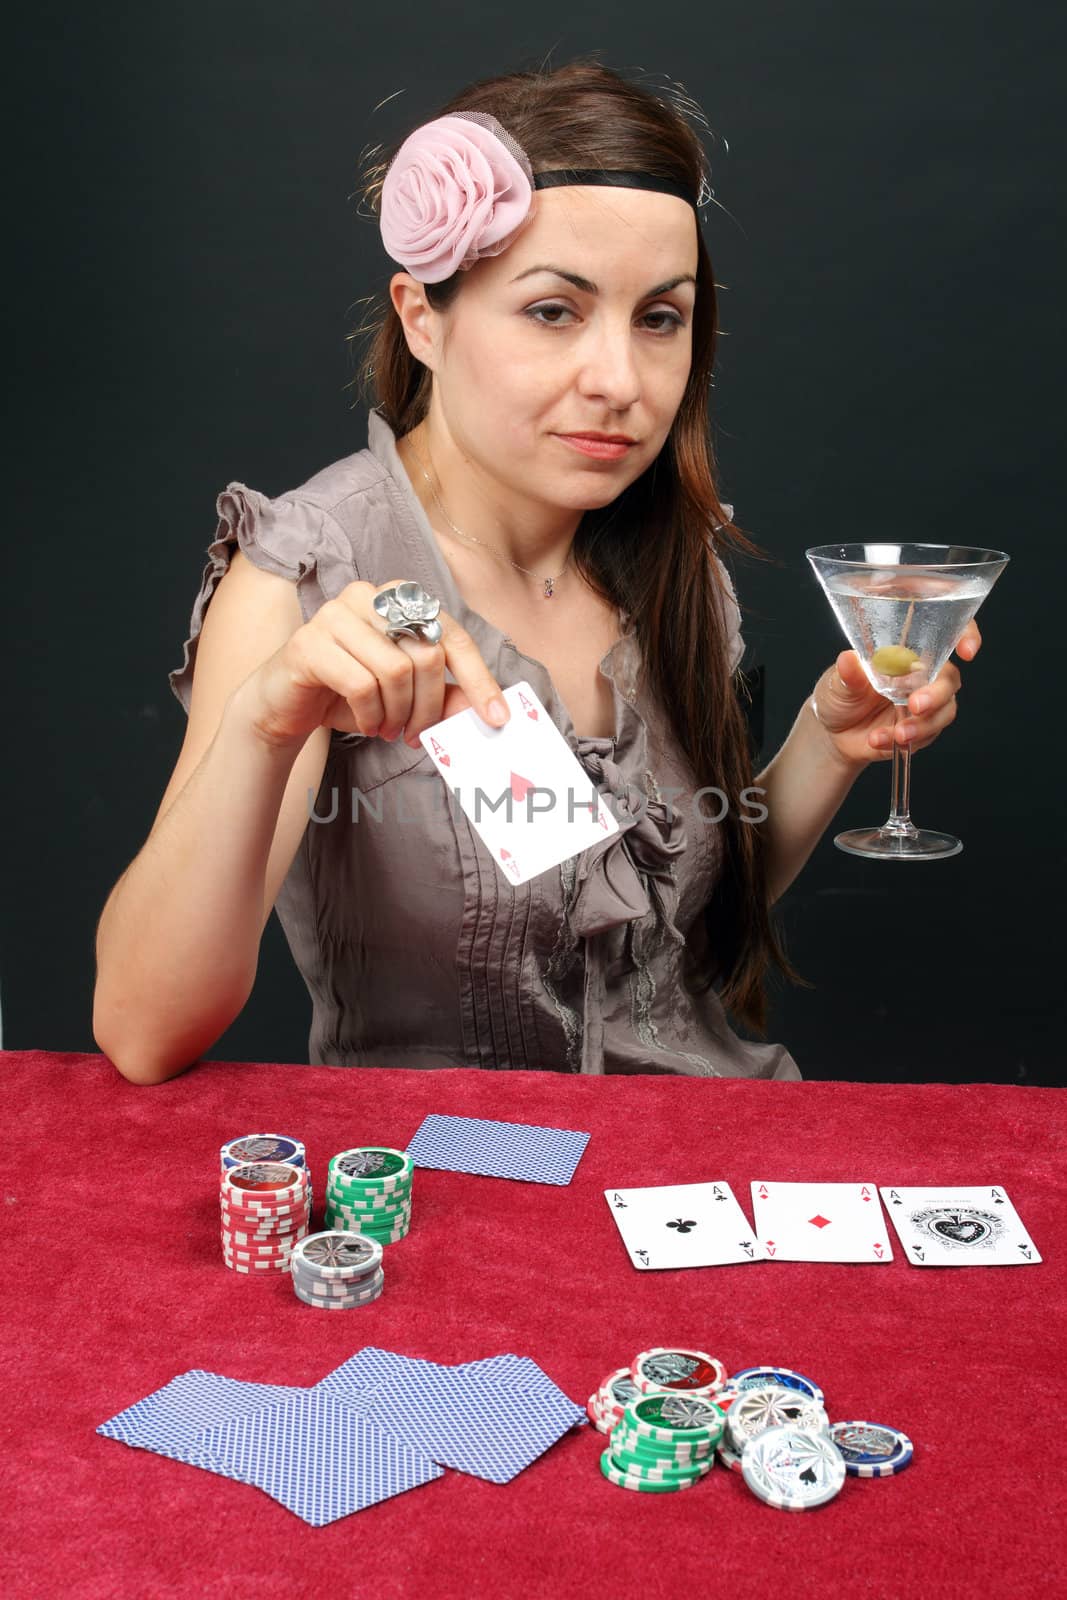 retro-dressed woman gambling at the casino 